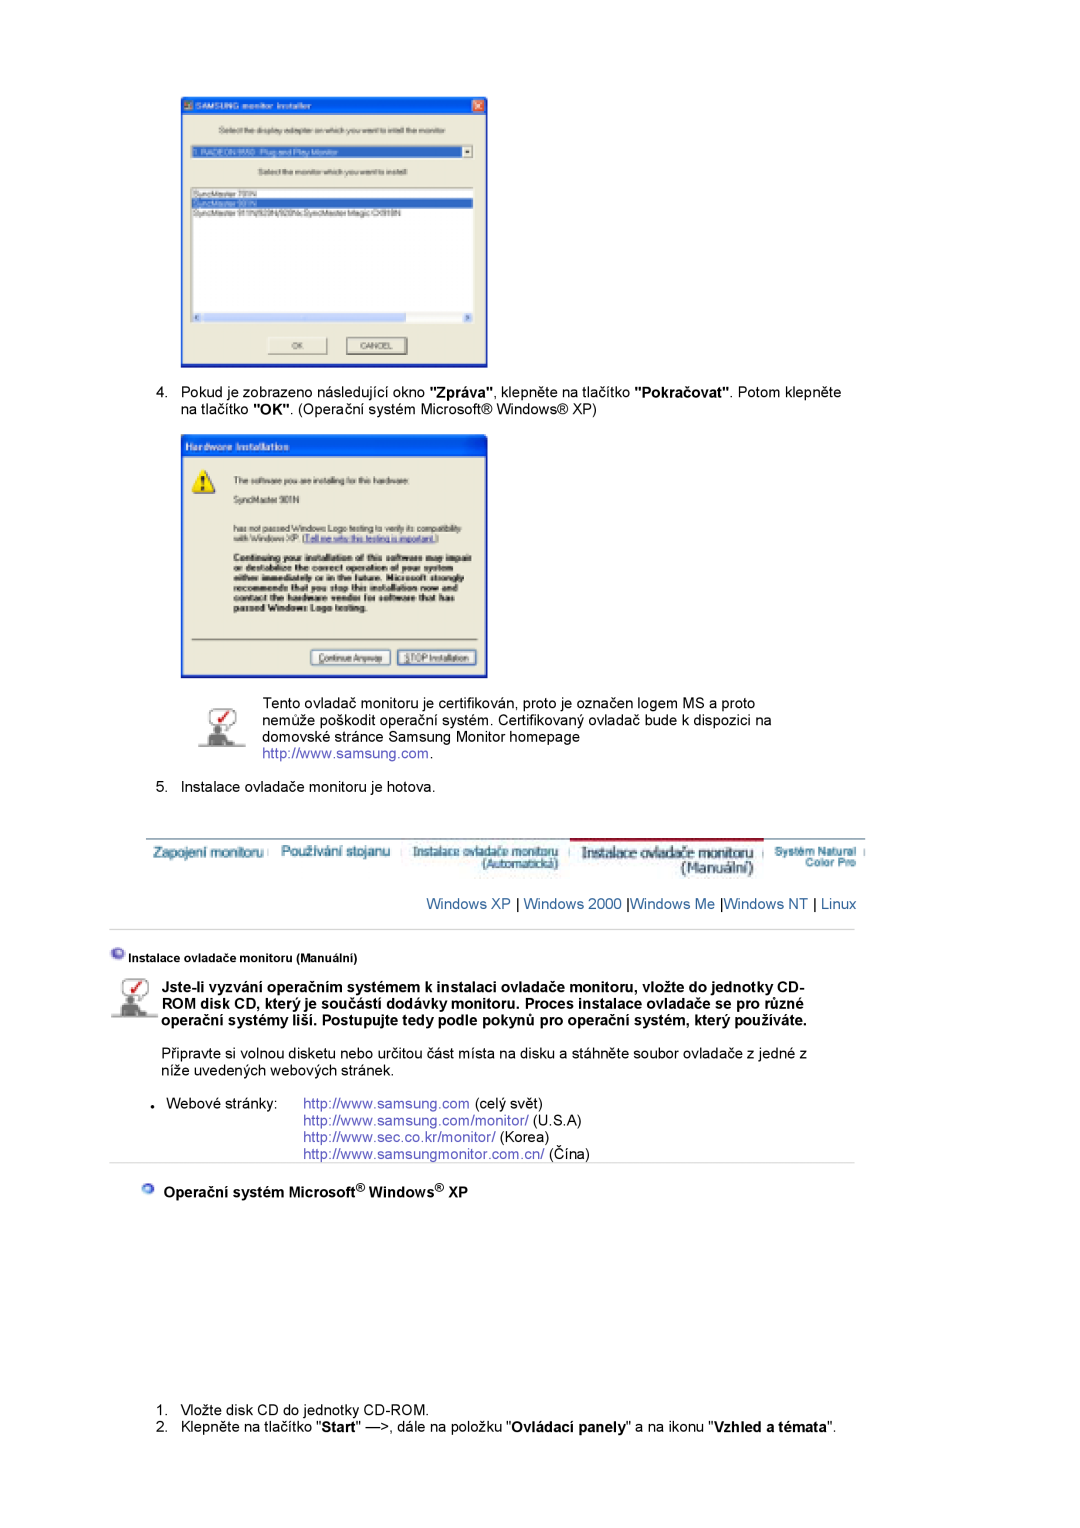 Samsung LS19DOASS/EDC manual Windows XP Windows 2000 Windows Me Windows NT Linux, Operační systém Microsoft Windows XP 